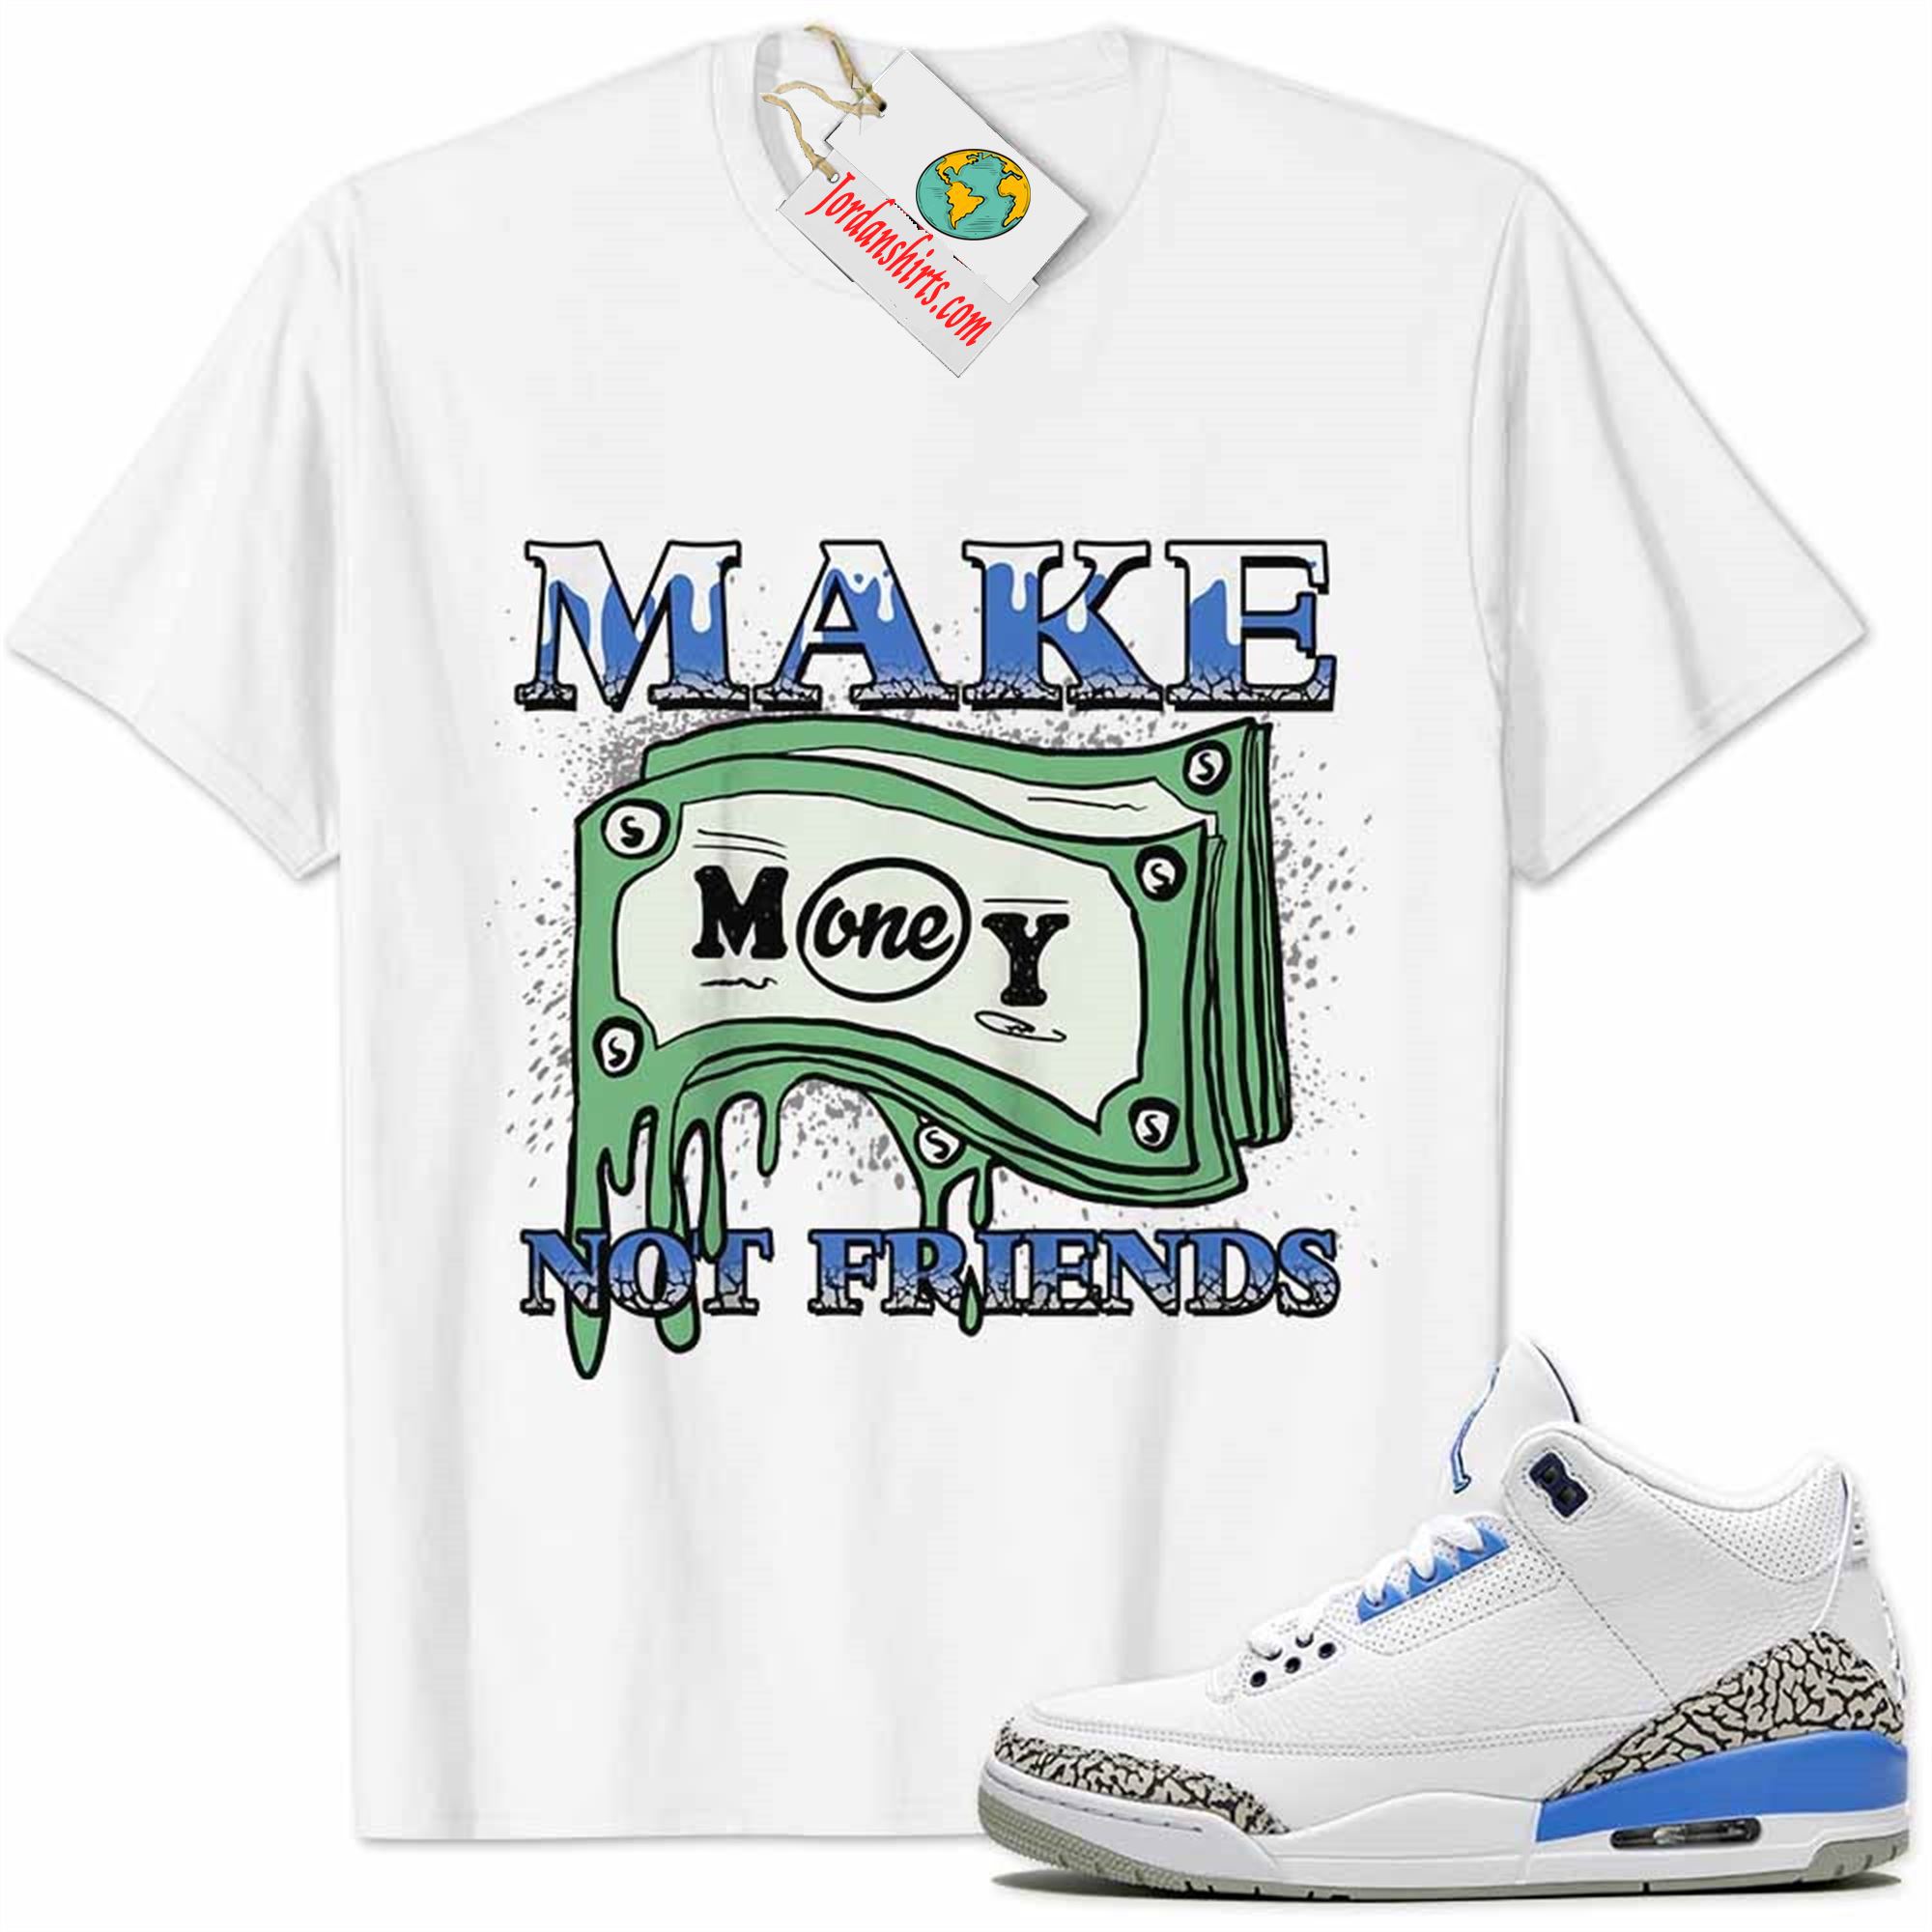 Jordan 3 Shirt, Jordan 3 Unc Shirt Make Money Graffiti White Full Size Up To 5xl